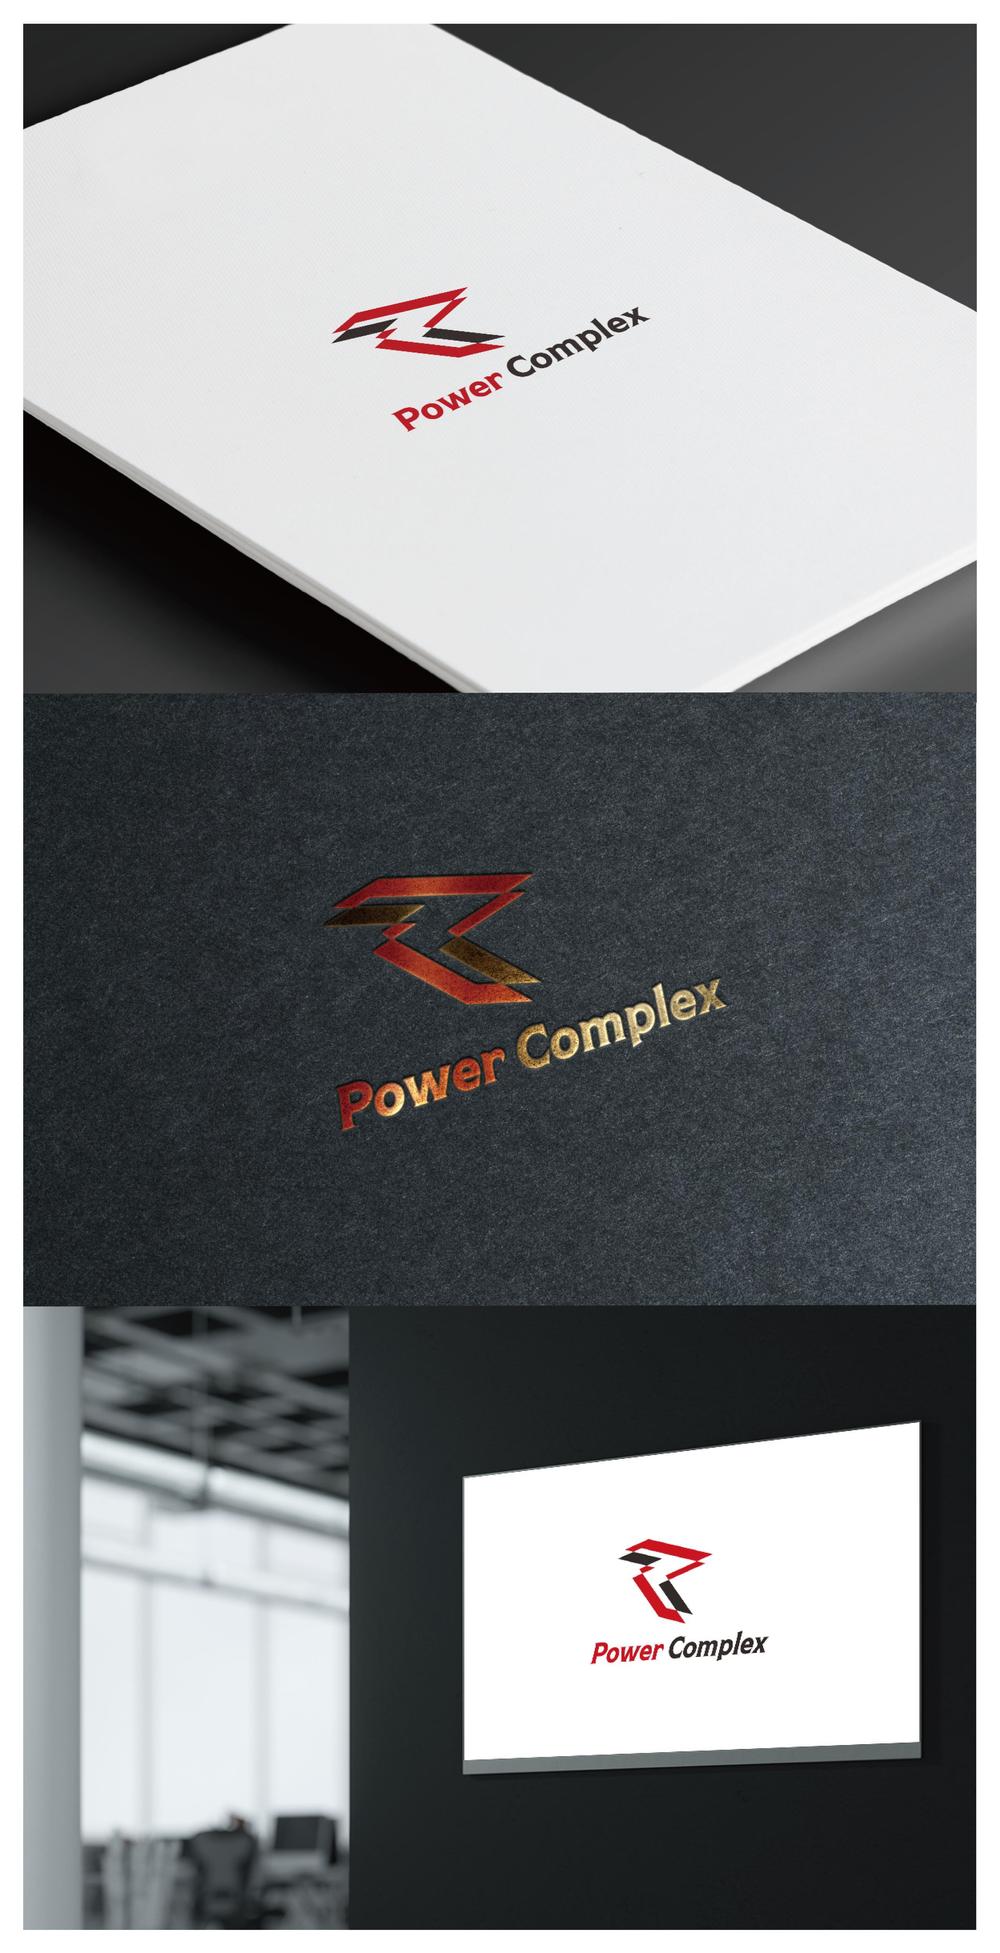 Power Complex_logo01_01.jpg